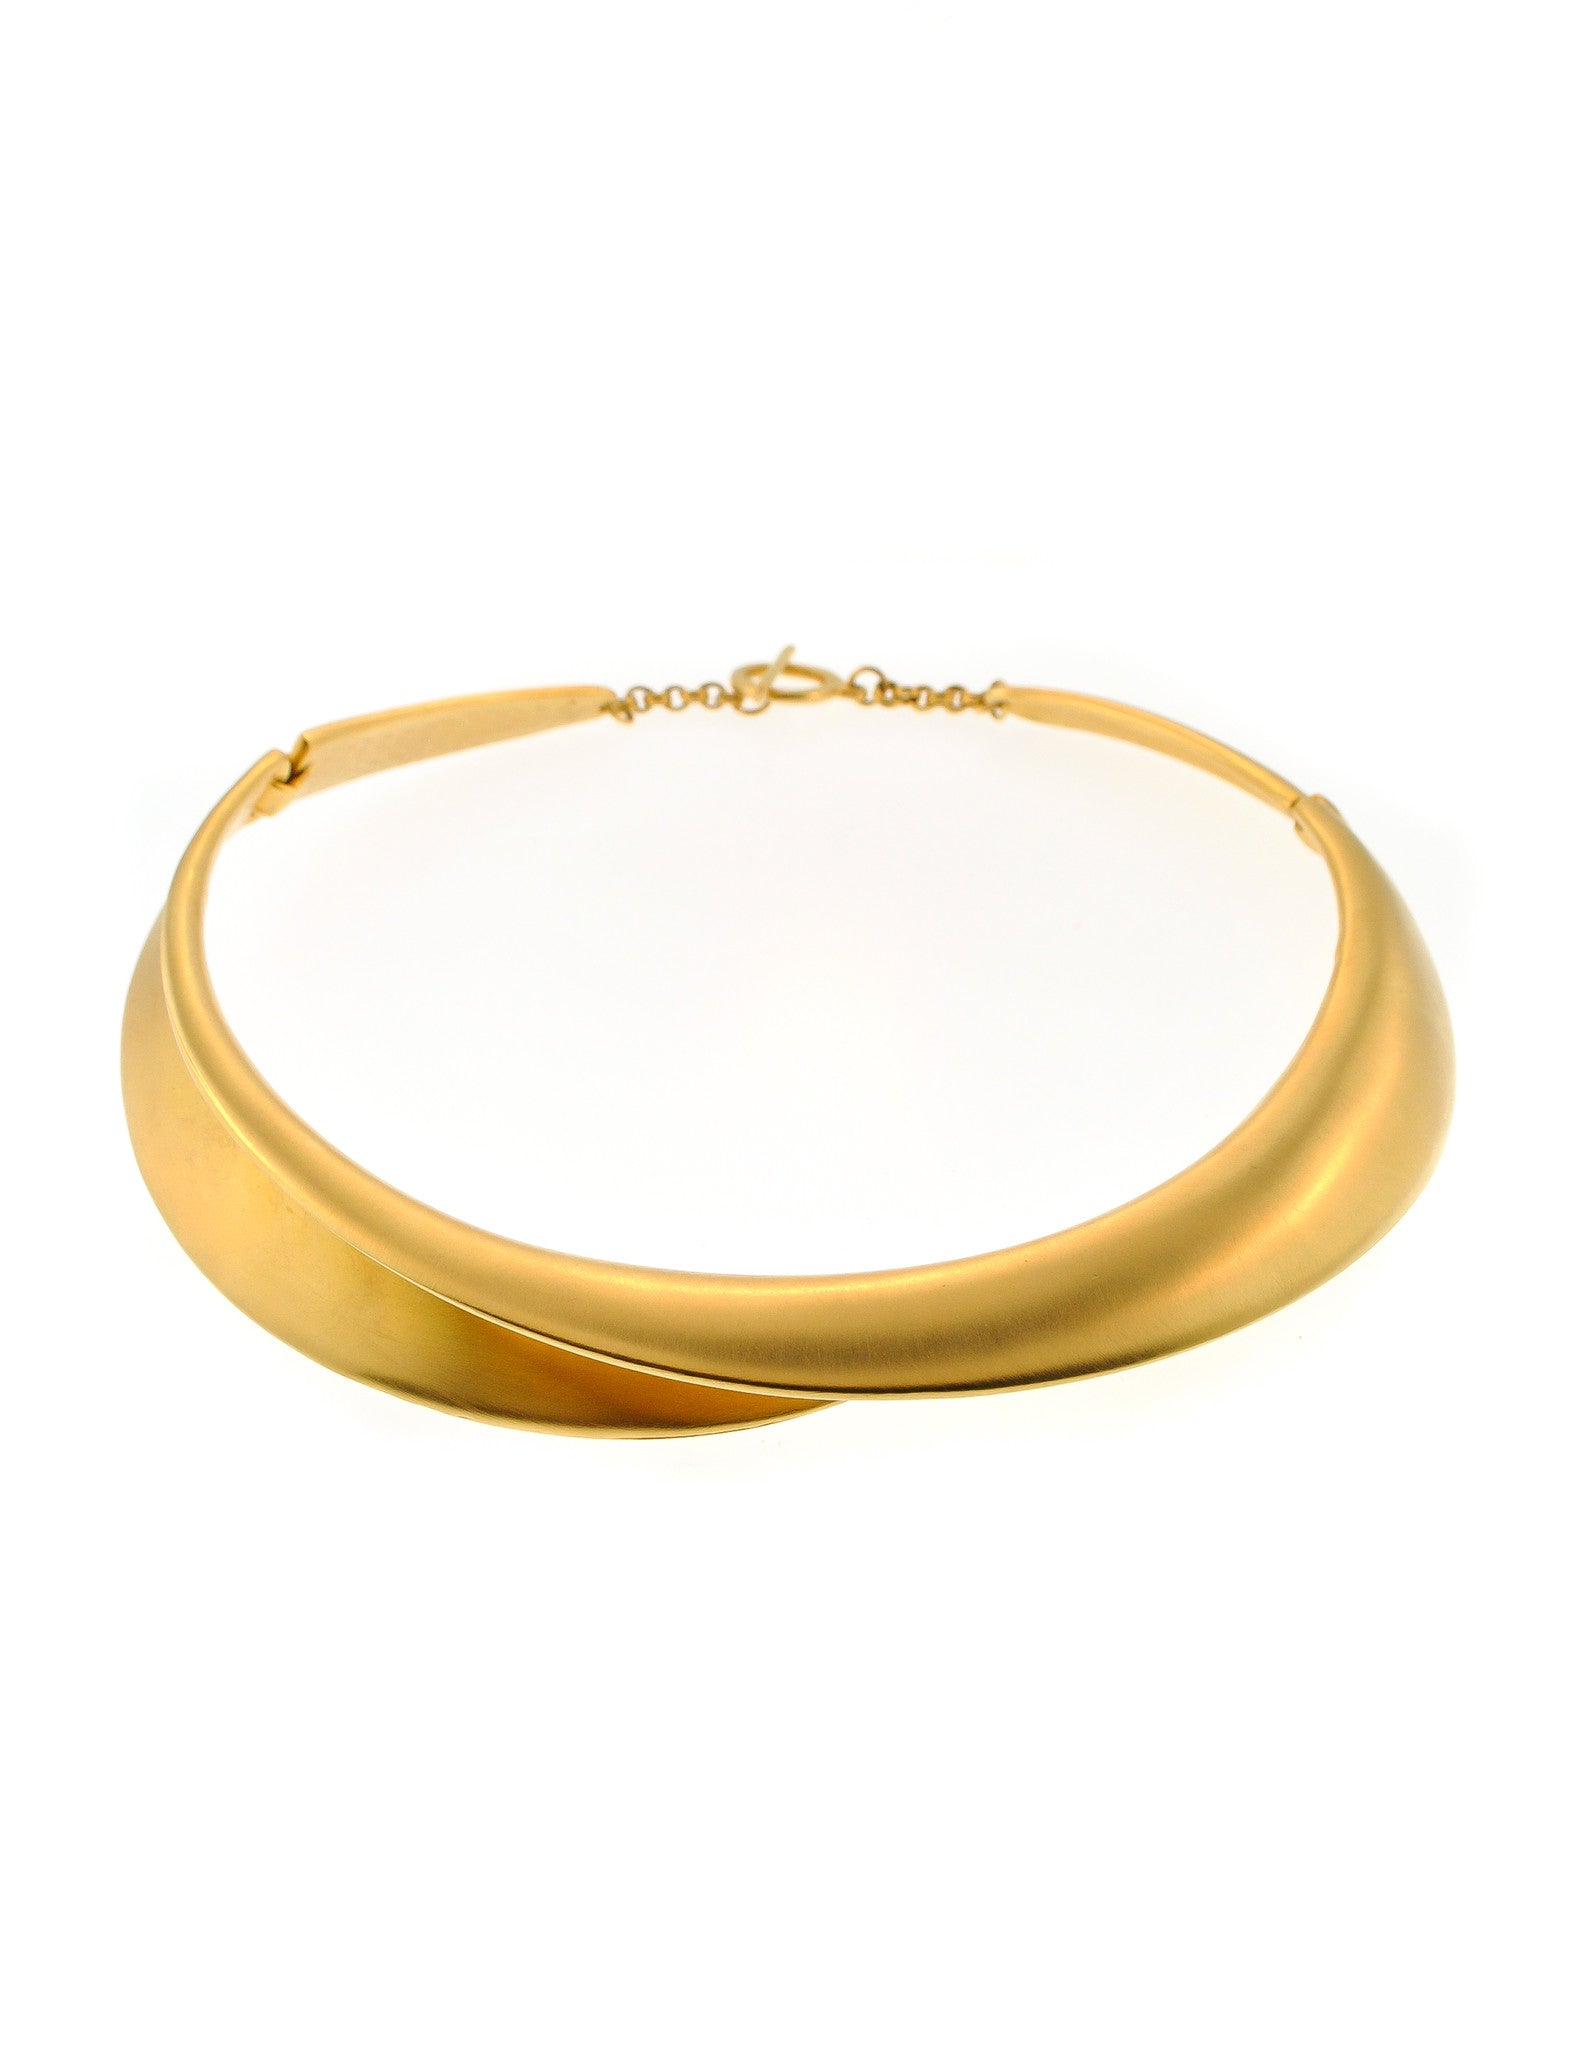 Clara Studio Vintage Gold Collar Choker Necklace - Amarcord Vintage Fashion
 - 1